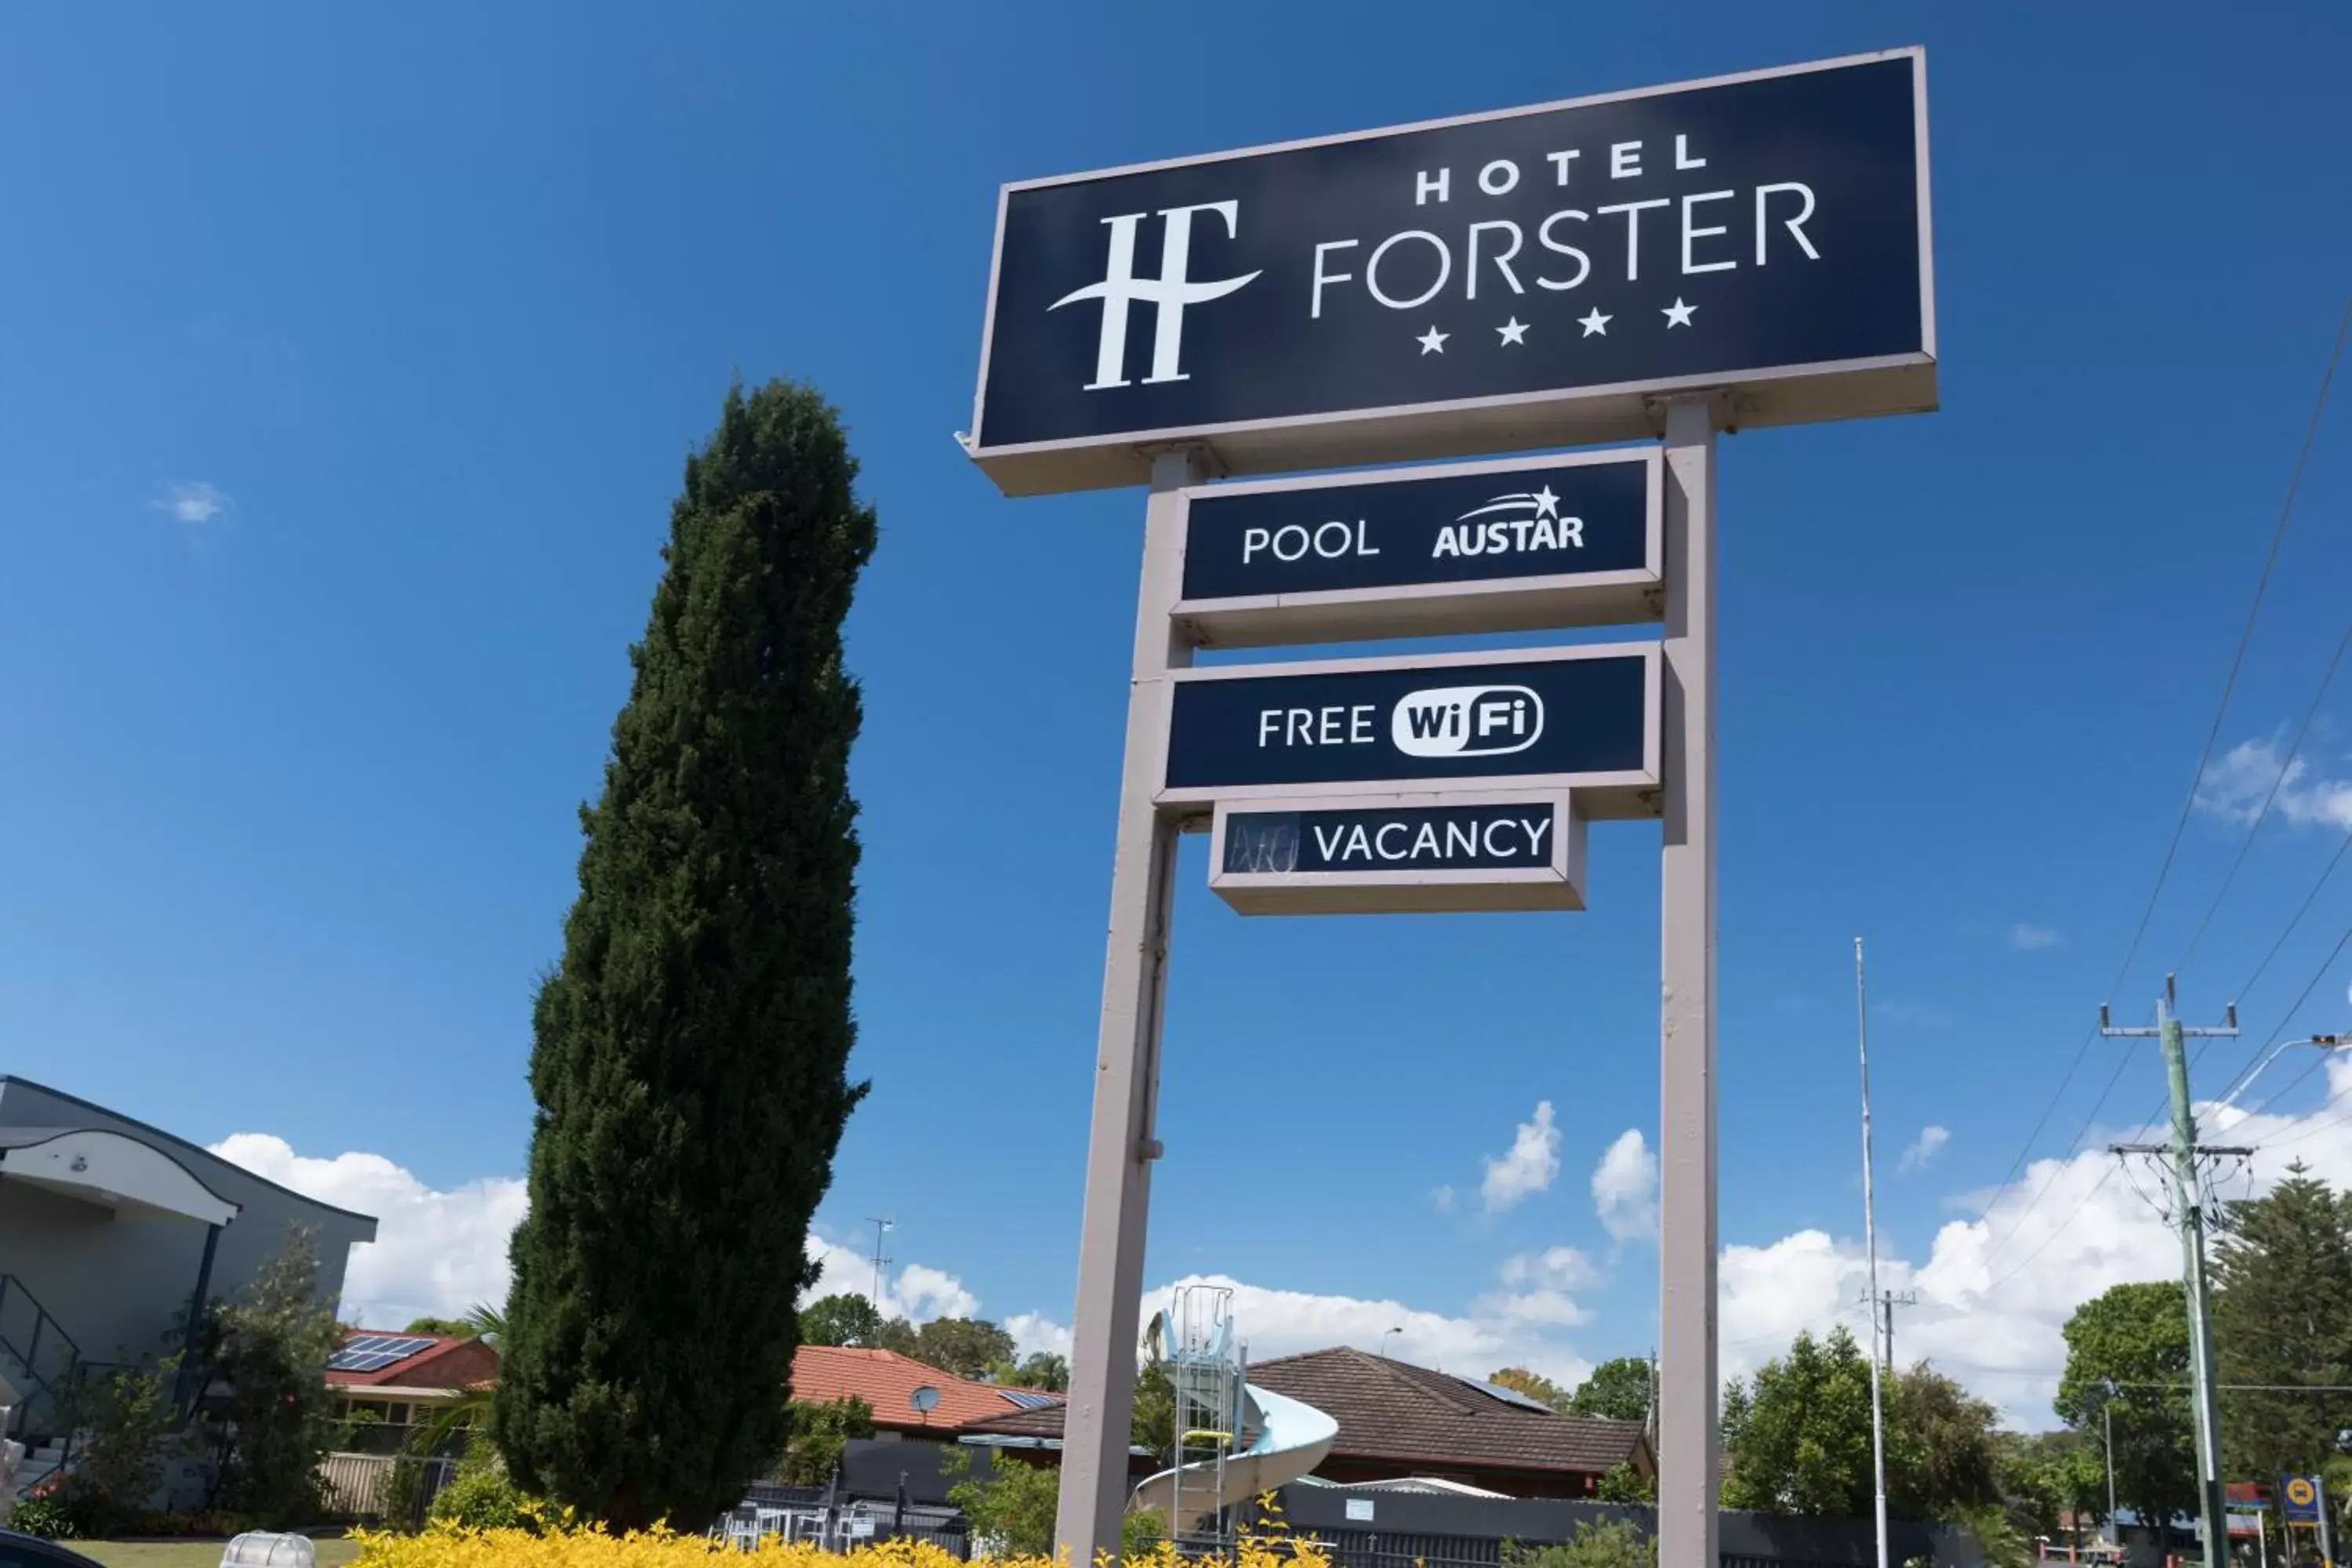 Property logo or sign in Hotel Forster